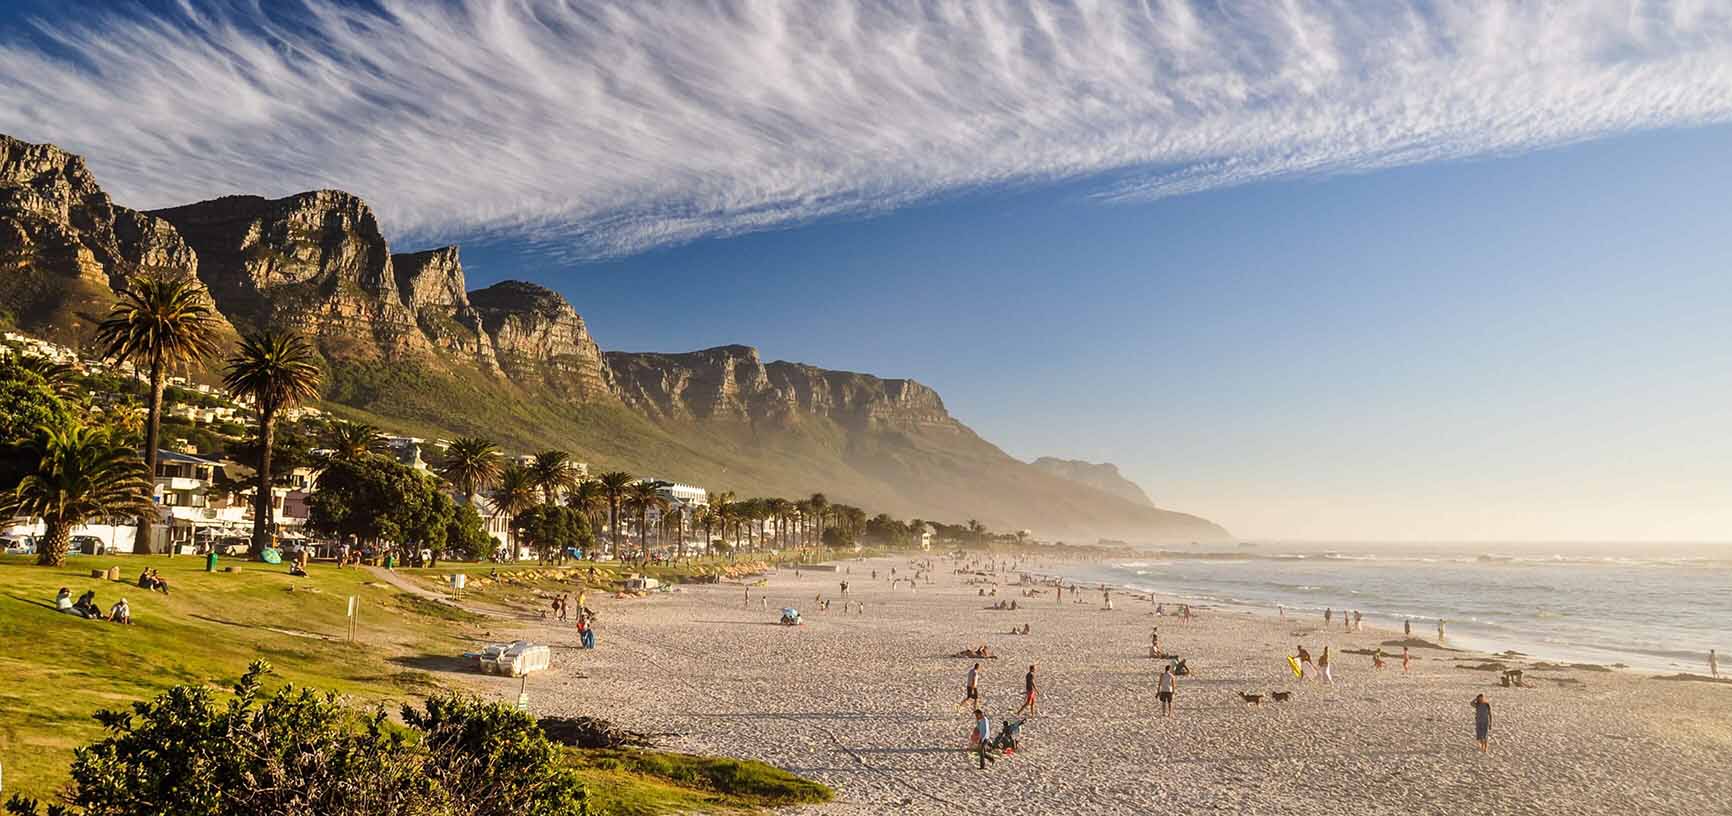 South African Beach